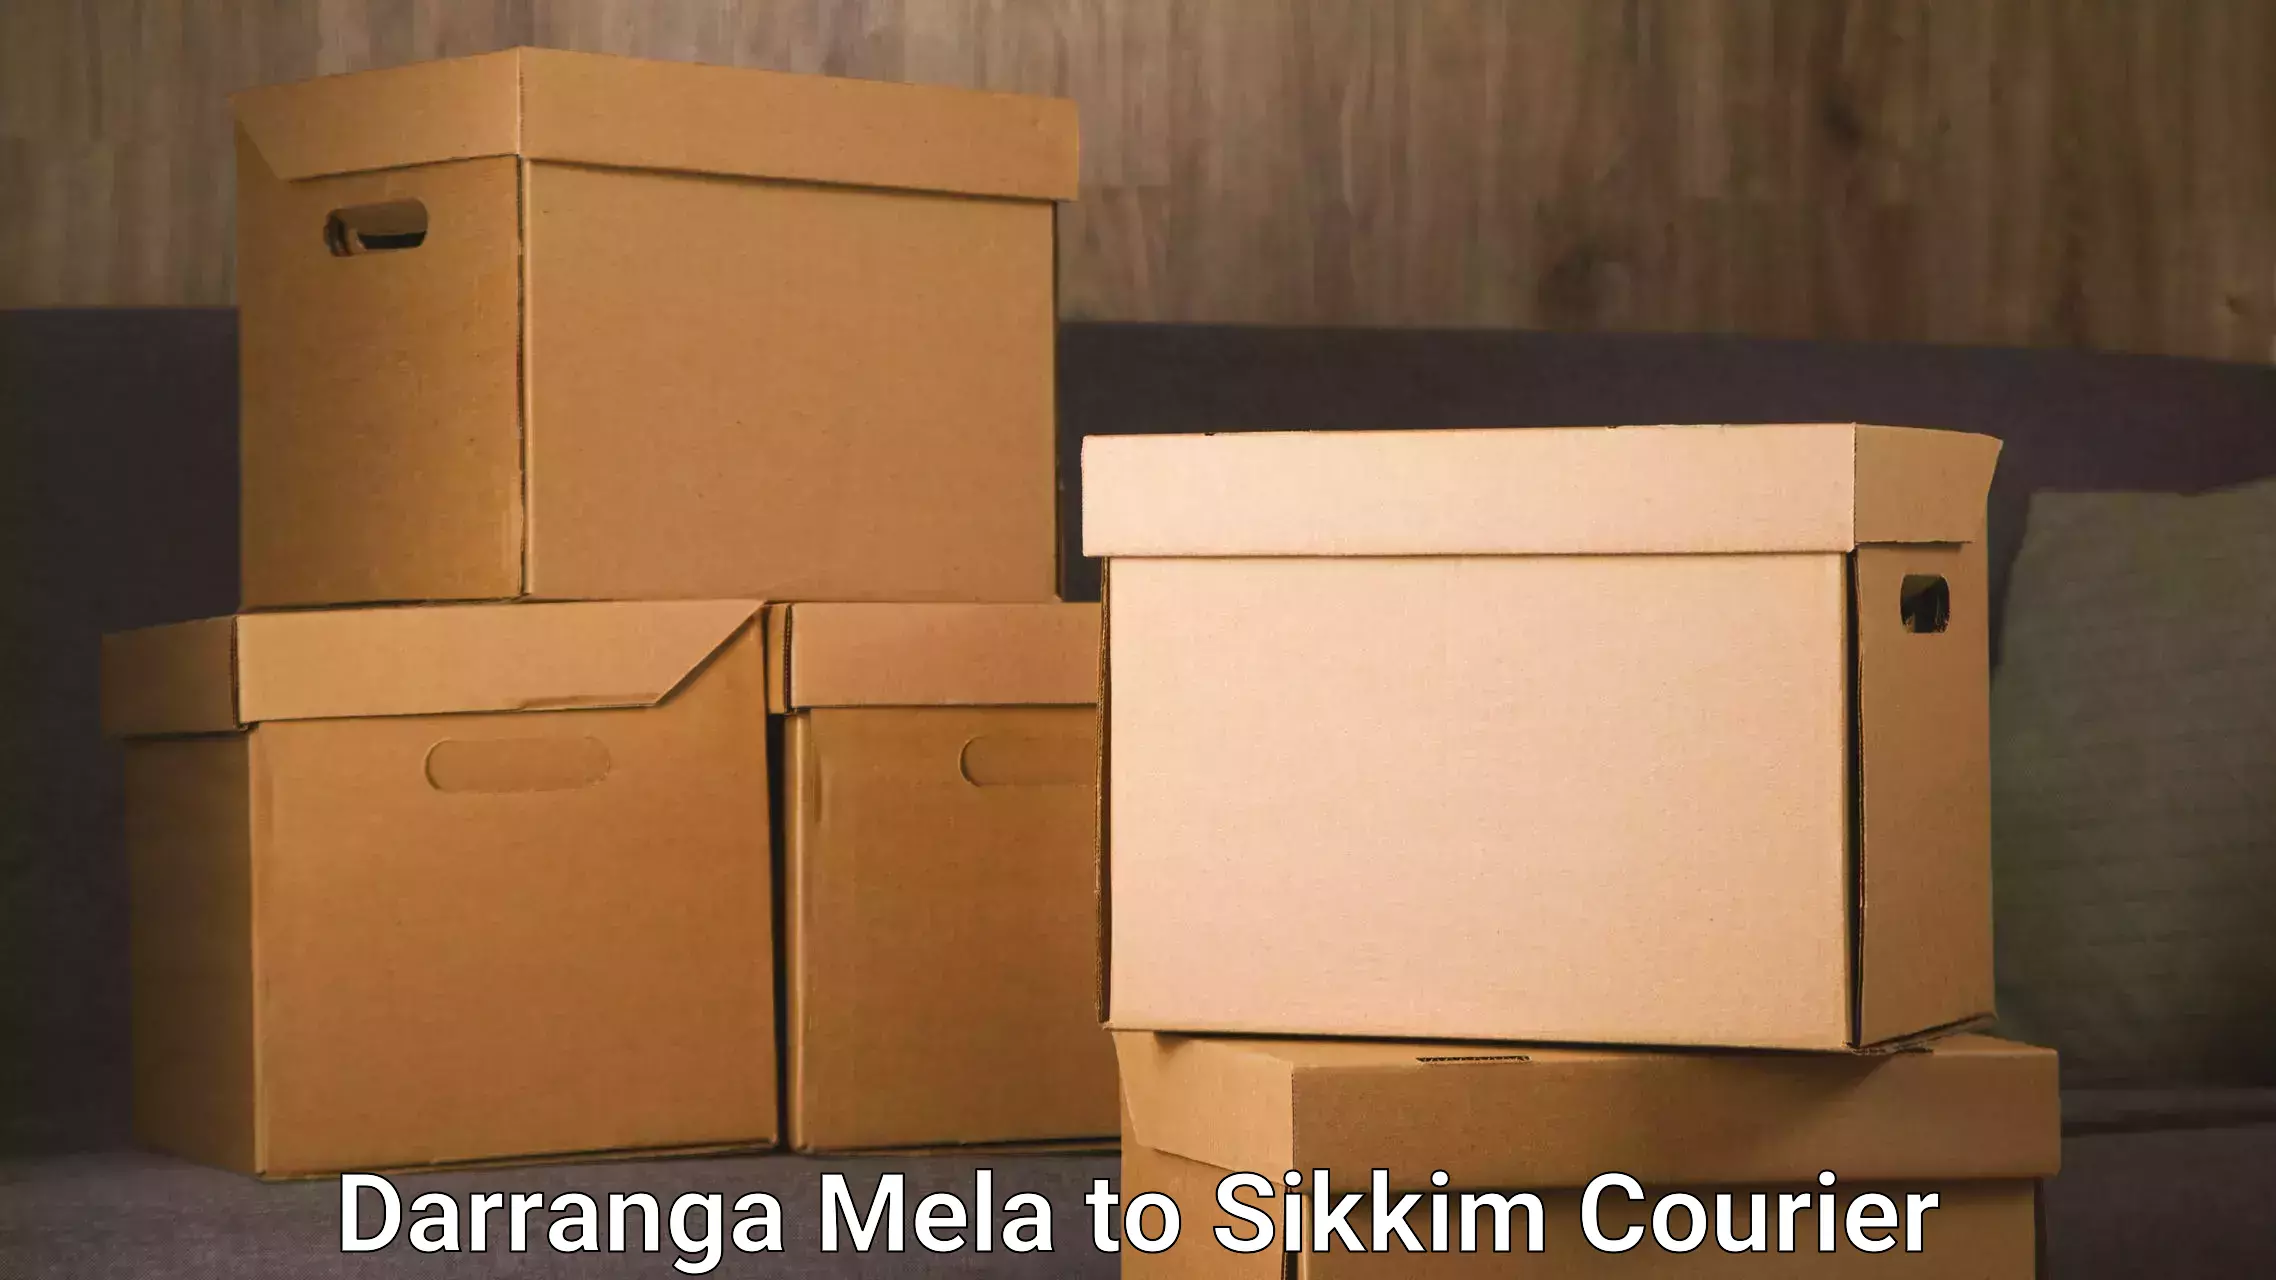 User-friendly delivery service Darranga Mela to Sikkim